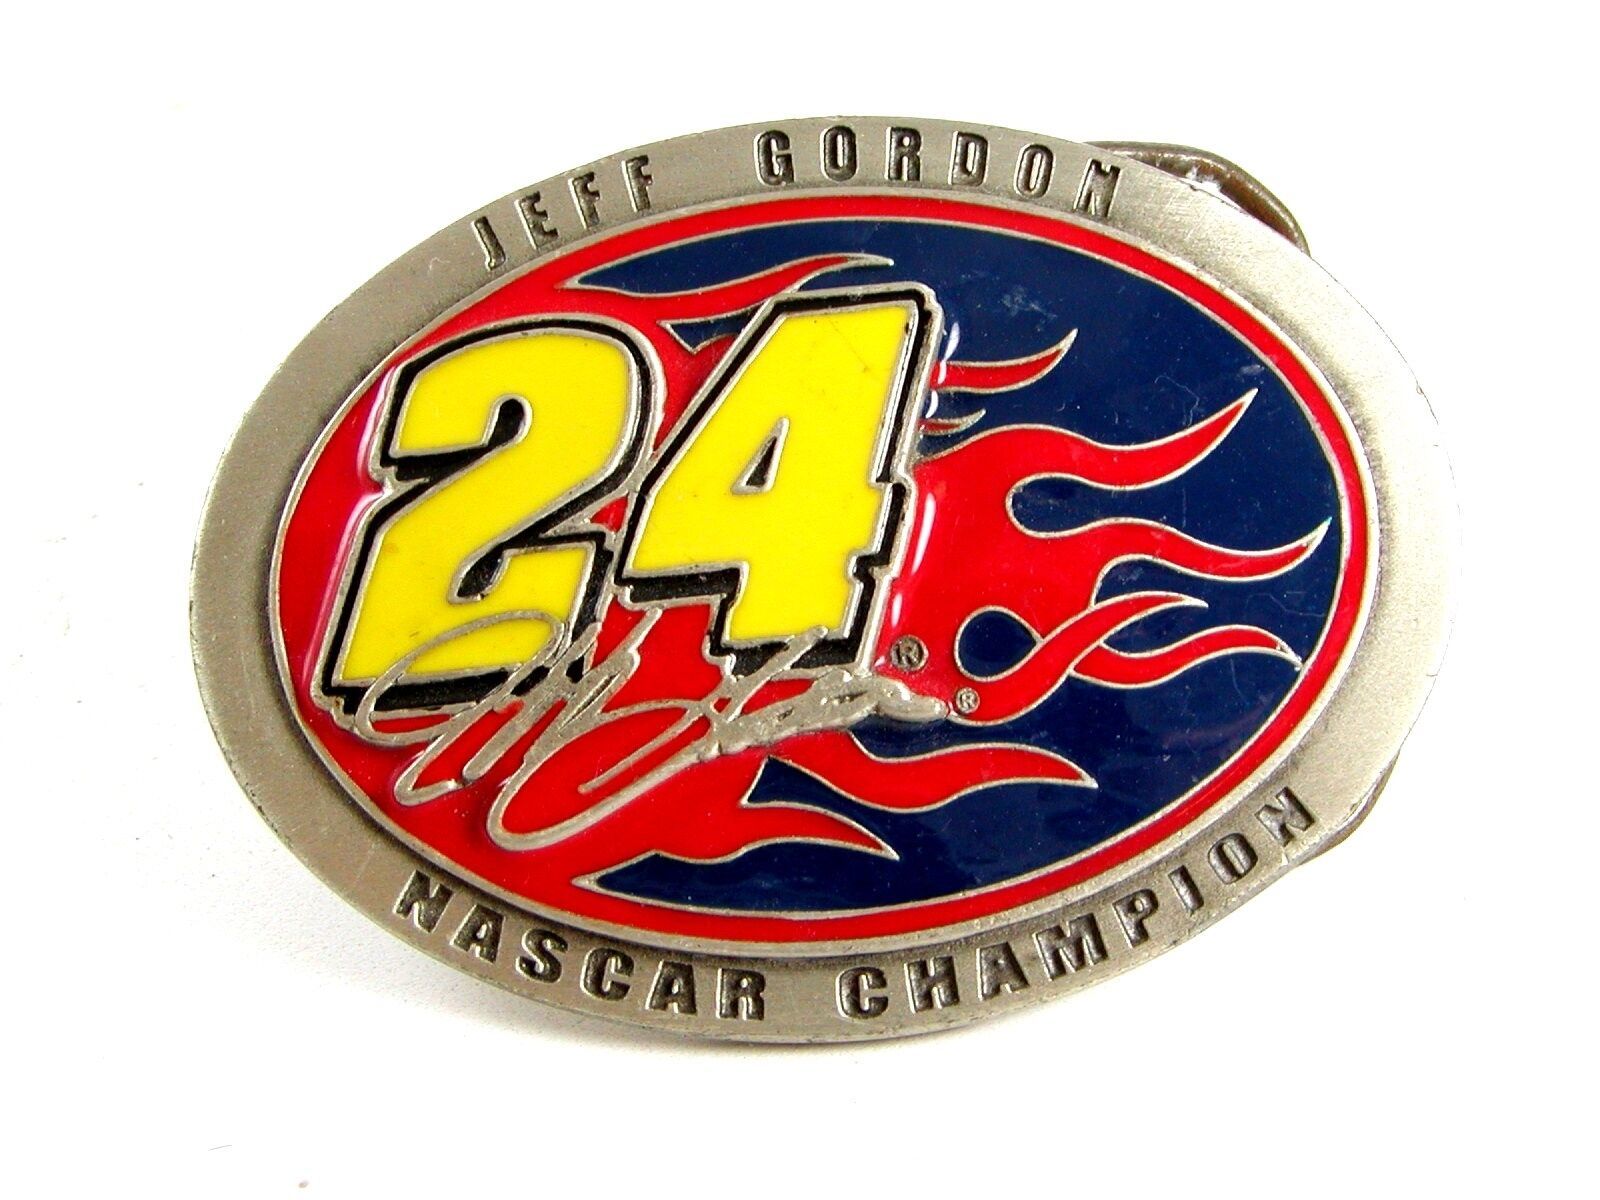 2006 Jeff Gordon Nascar Champion Pewter Belt Buckle 12112013rc - $34.64